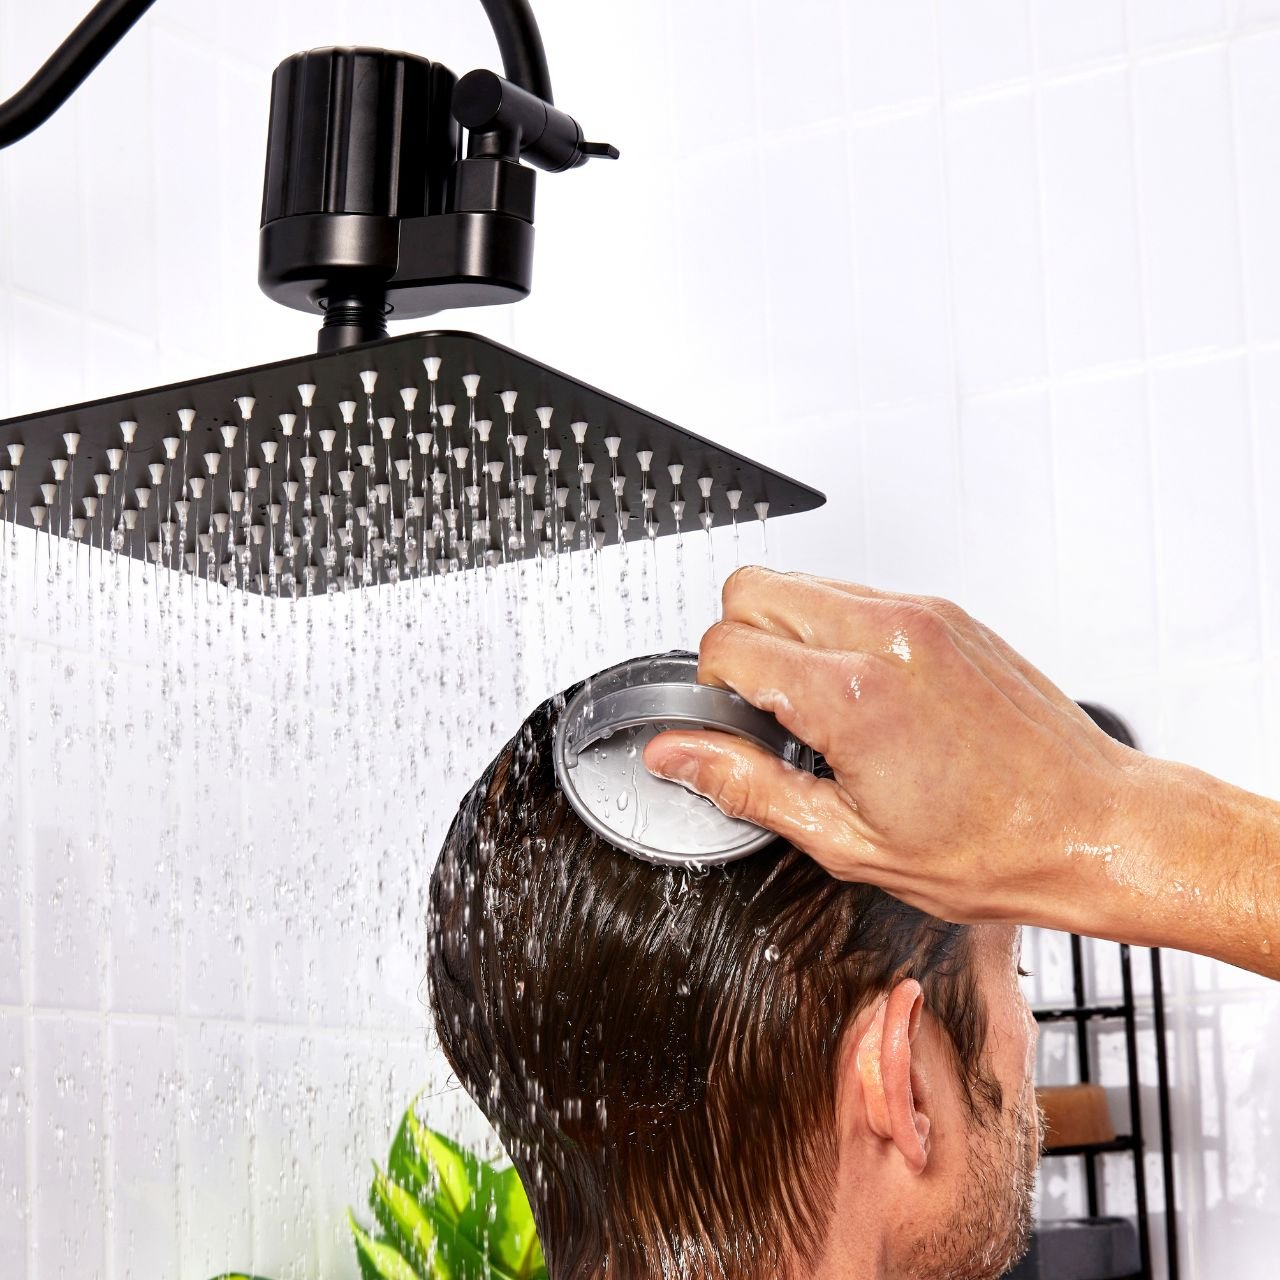 Shower Filter + Shampoo & Conditioner 4pc Set - Black